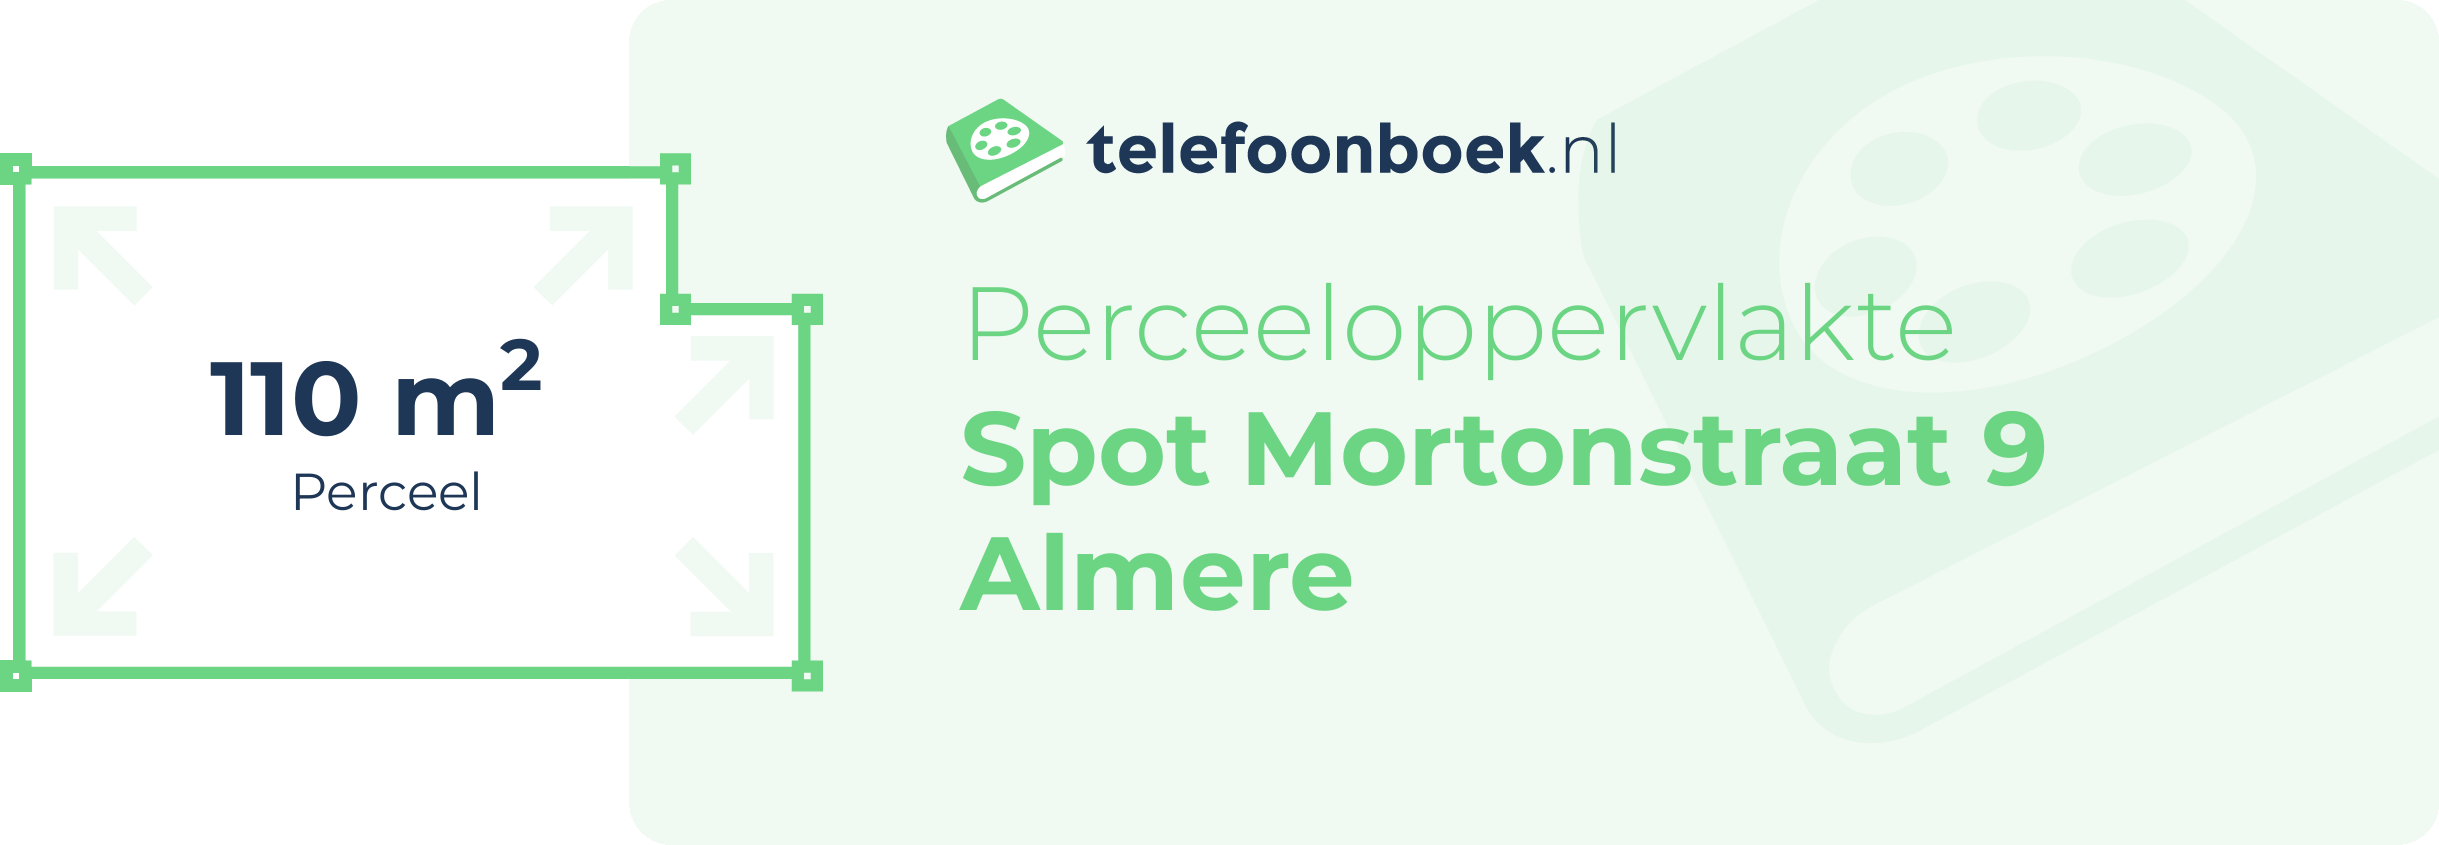 Perceeloppervlakte Spot Mortonstraat 9 Almere